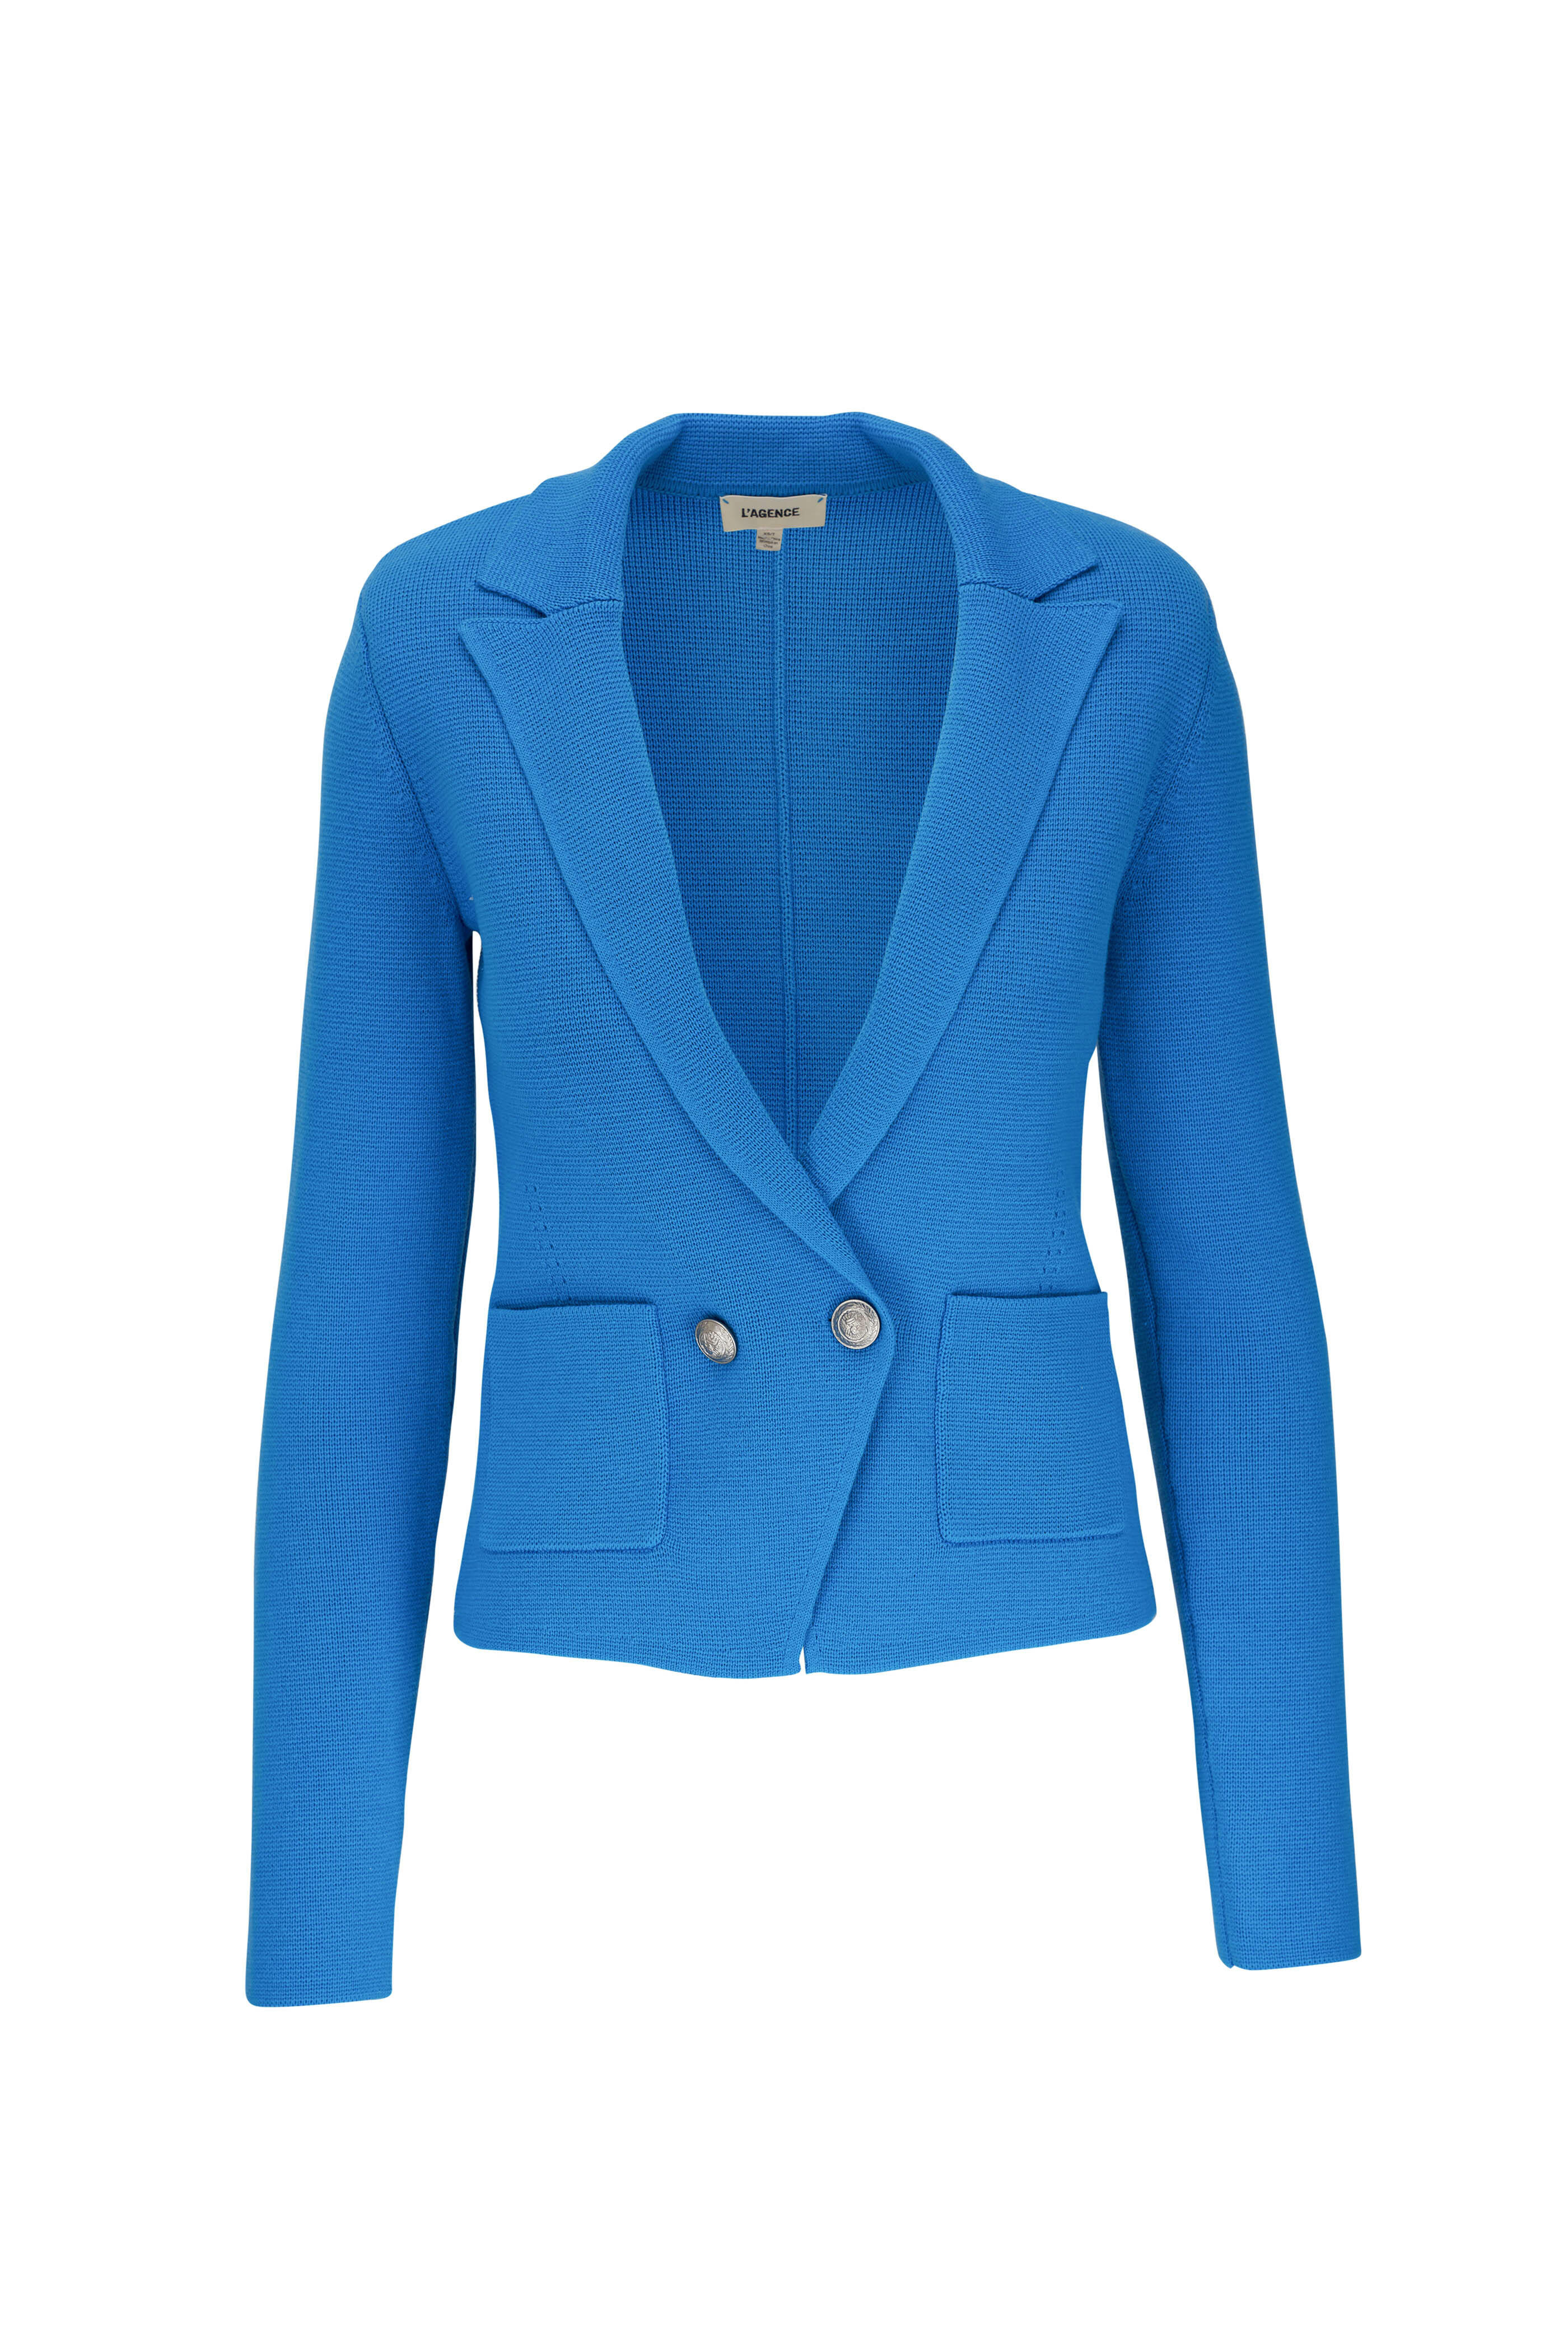 L'Agence - Sofia Blue Knit Blazer | Mitchell Stores